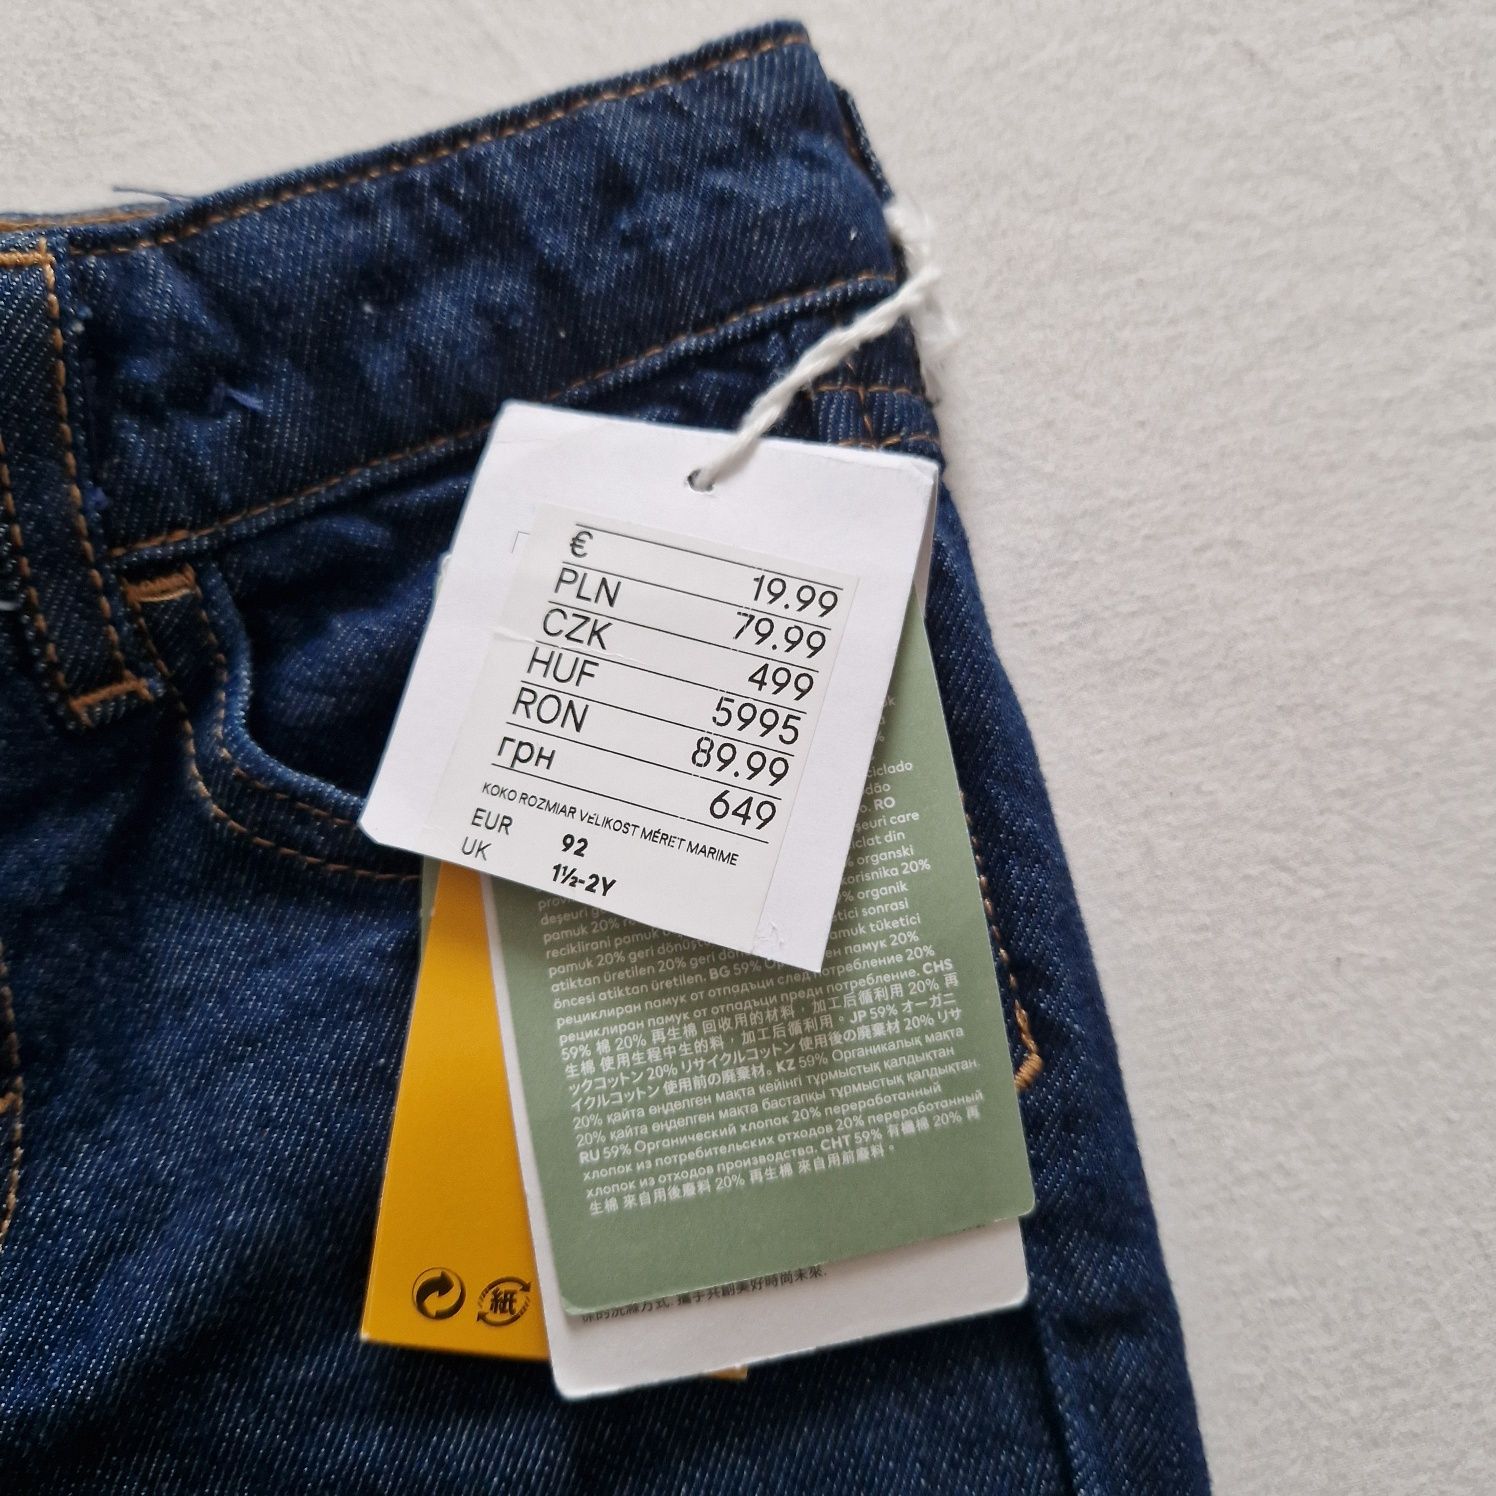 Blugi/ jeans H&M, mas 92, copii, model relaxed fit, NOI cu eticheta